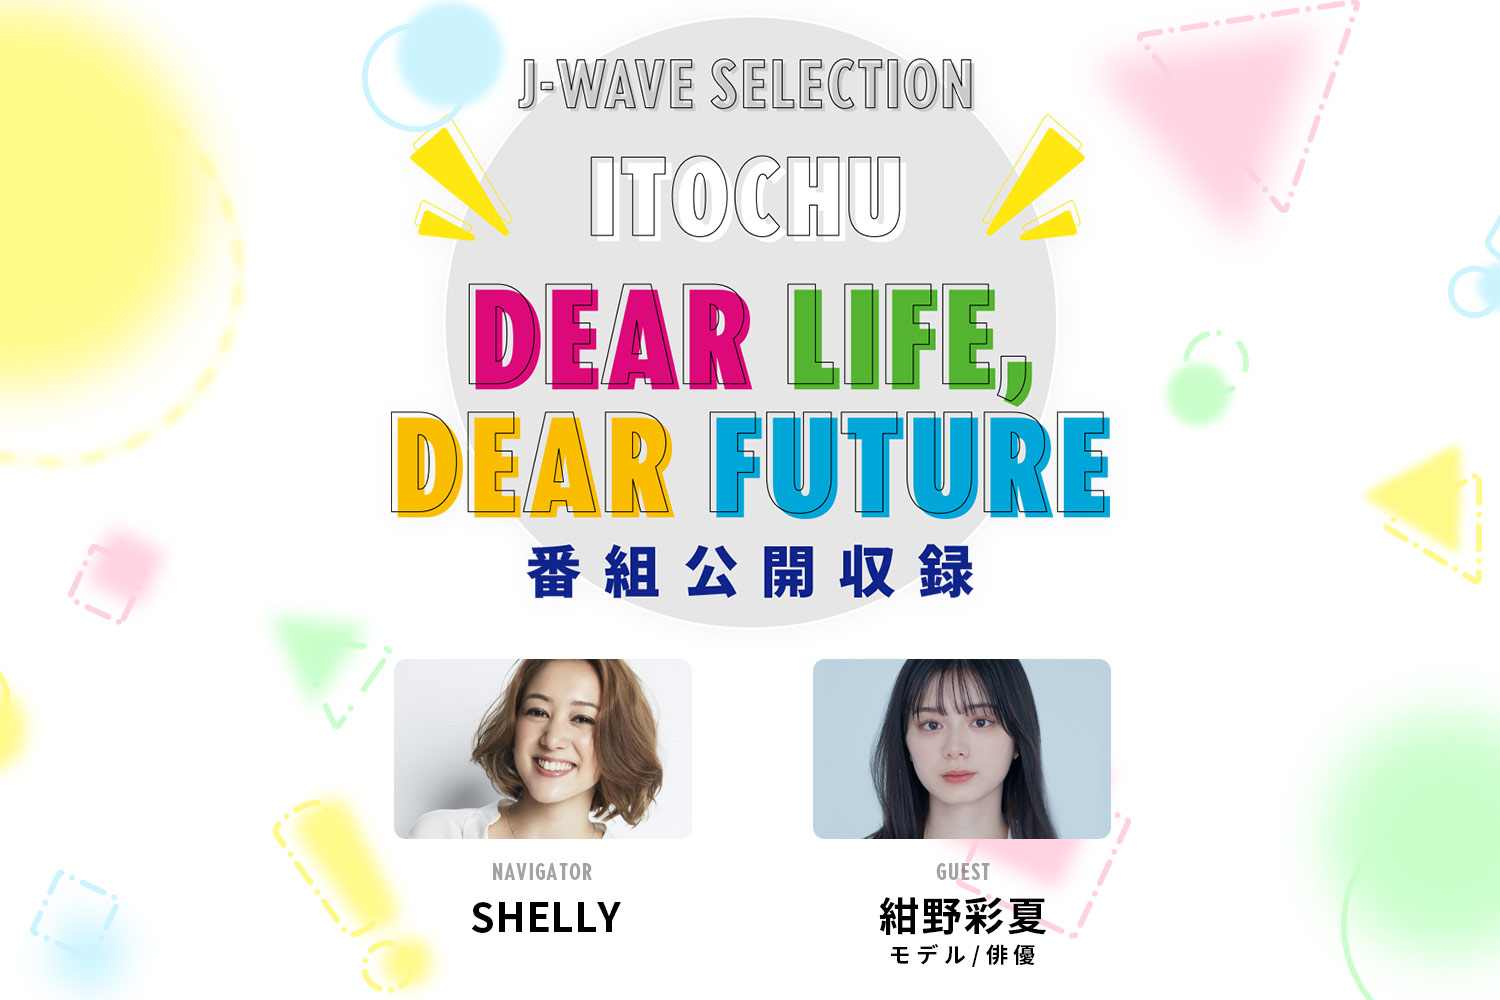 SHELLYがモデル/俳優の紺野彩夏さんを迎えラジオ番組「ITOCHU DEAR LIFE, DEAR FUTURE」の公開収録を開催